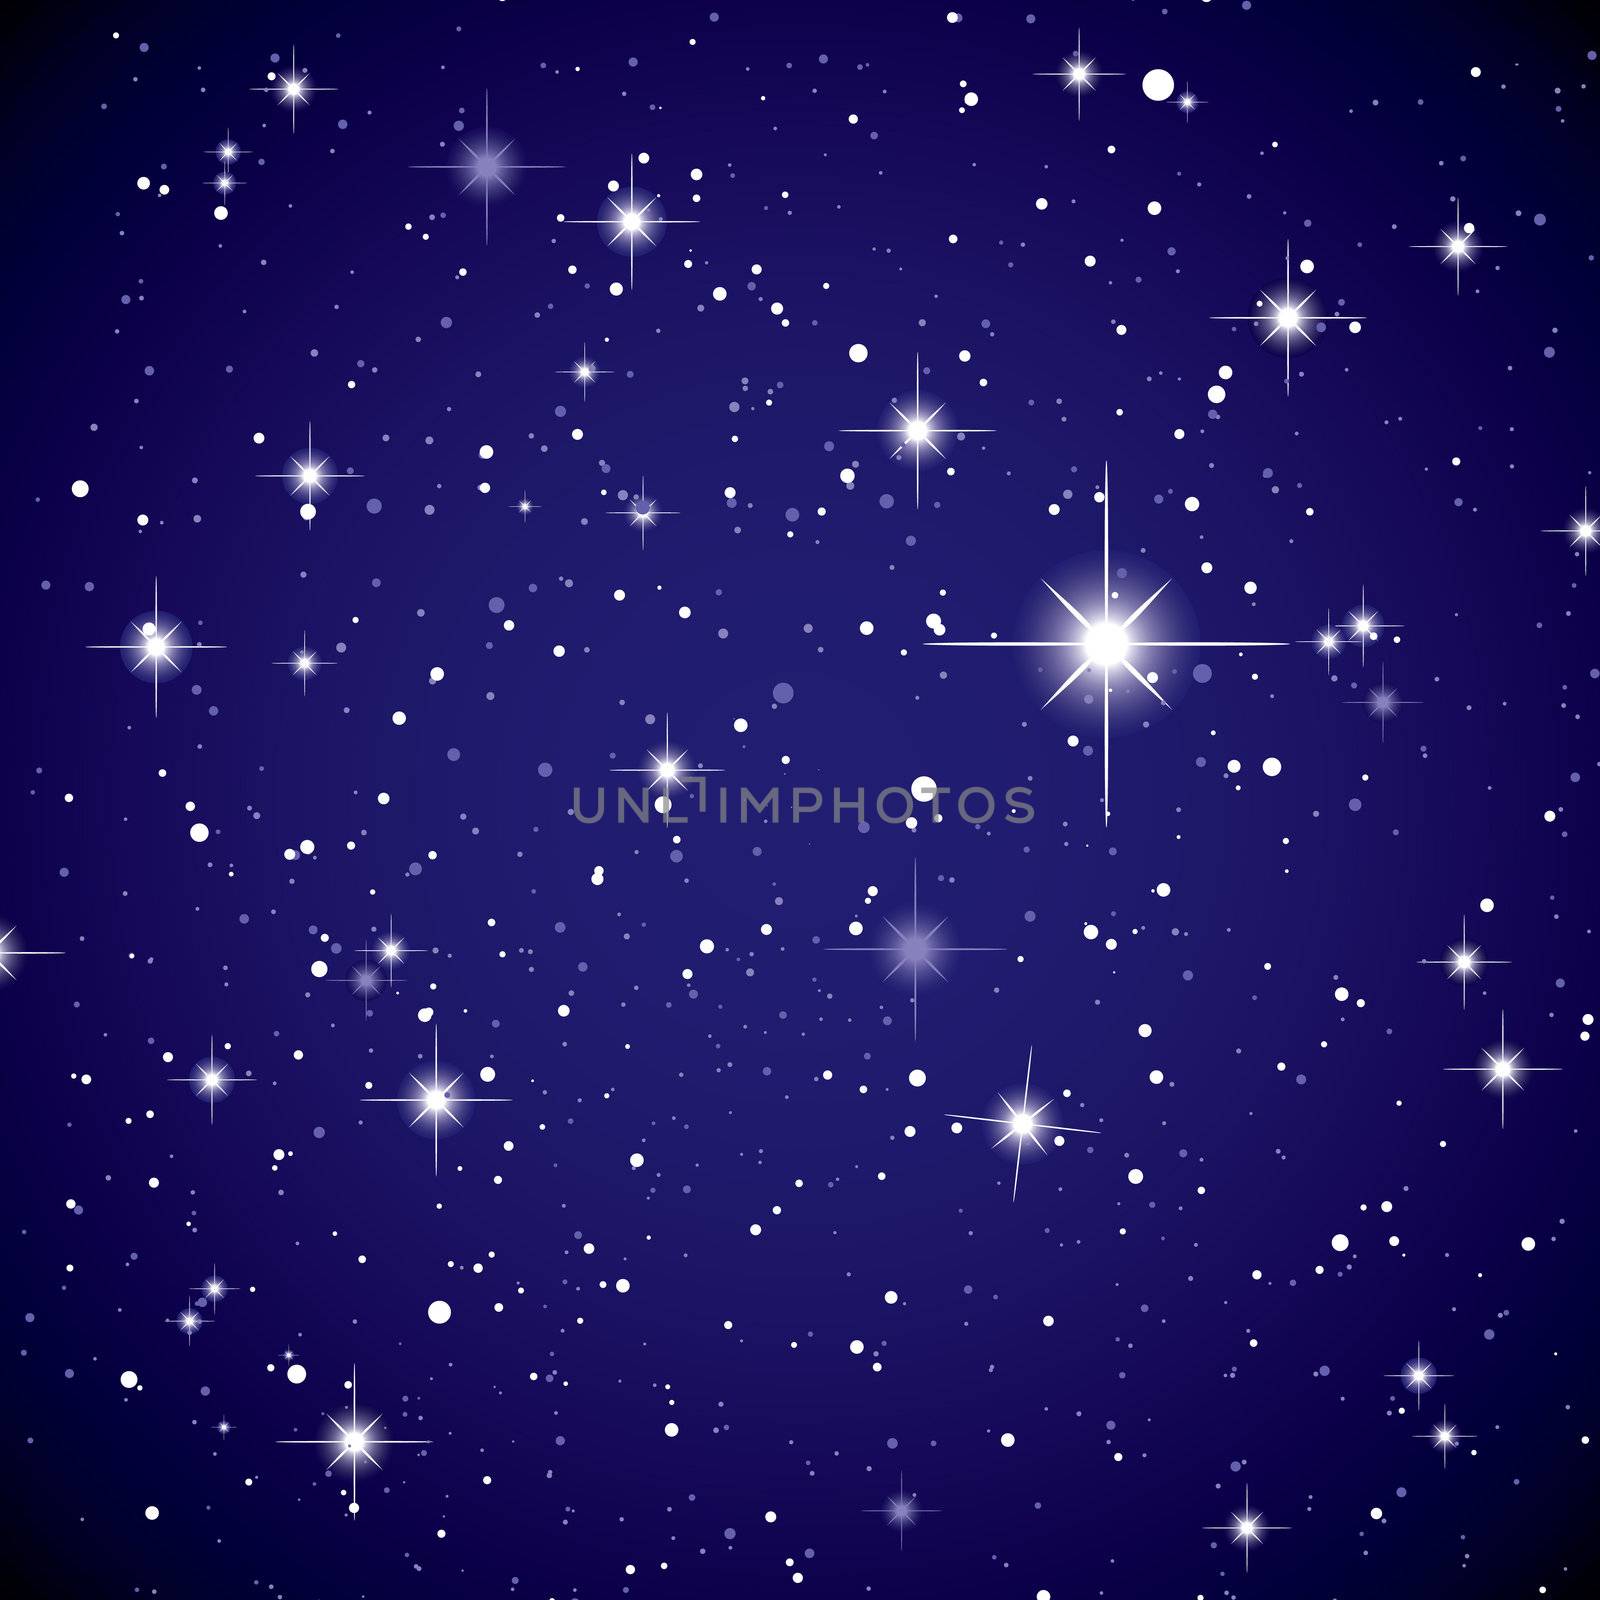 Space view star sky by nicemonkey